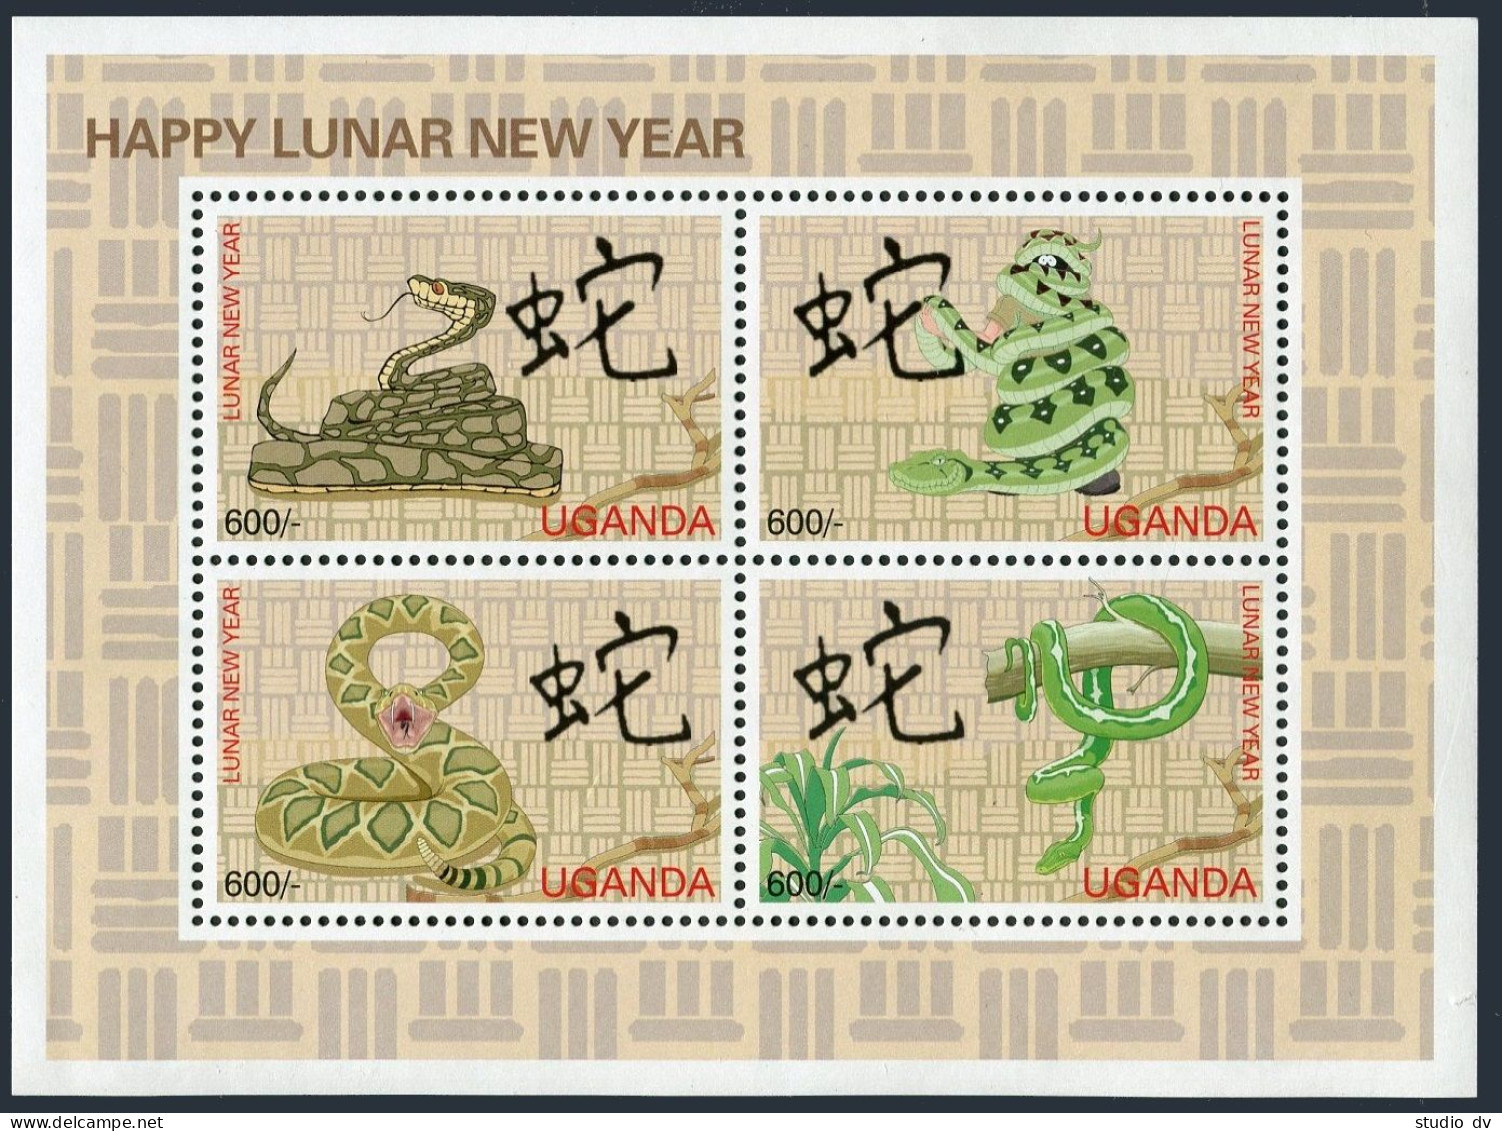 Uganda 1689 Ad,1690 Sheets,MNH. New Year 2001,Lunar Year Of The Snake. - Ouganda (1962-...)